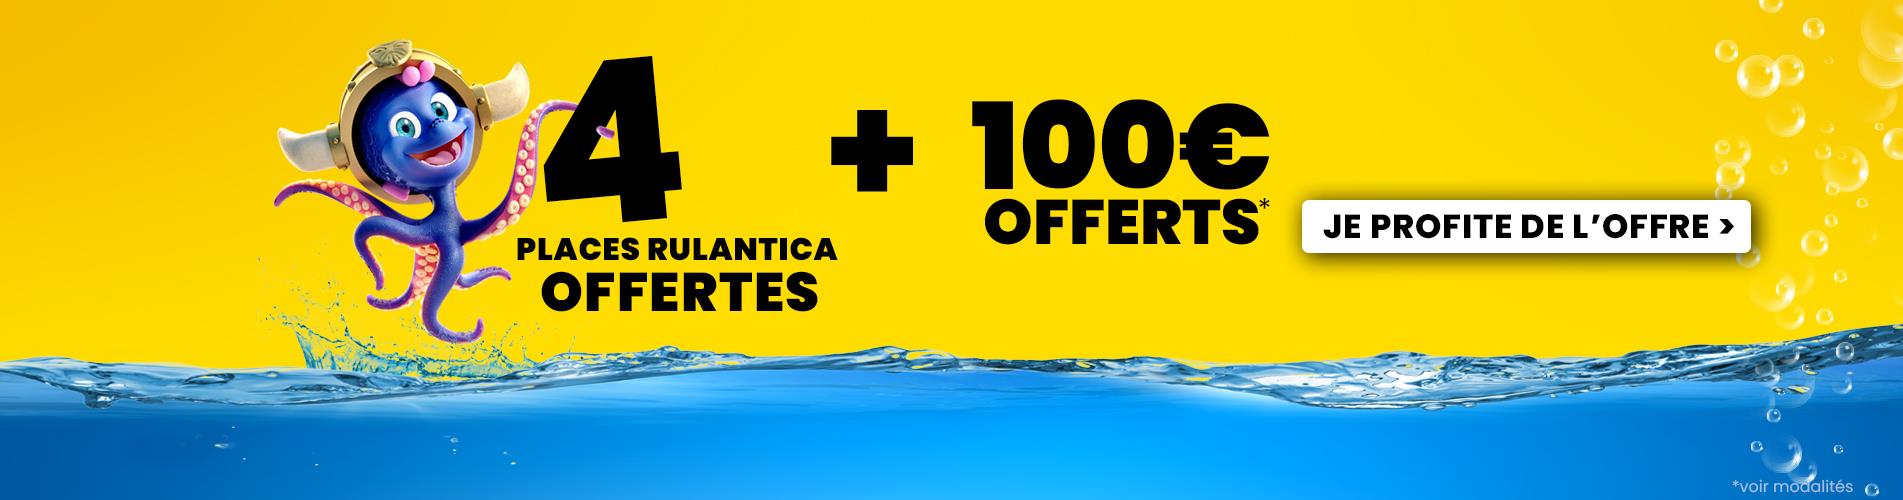 [1] Offre Rulantica + 100€